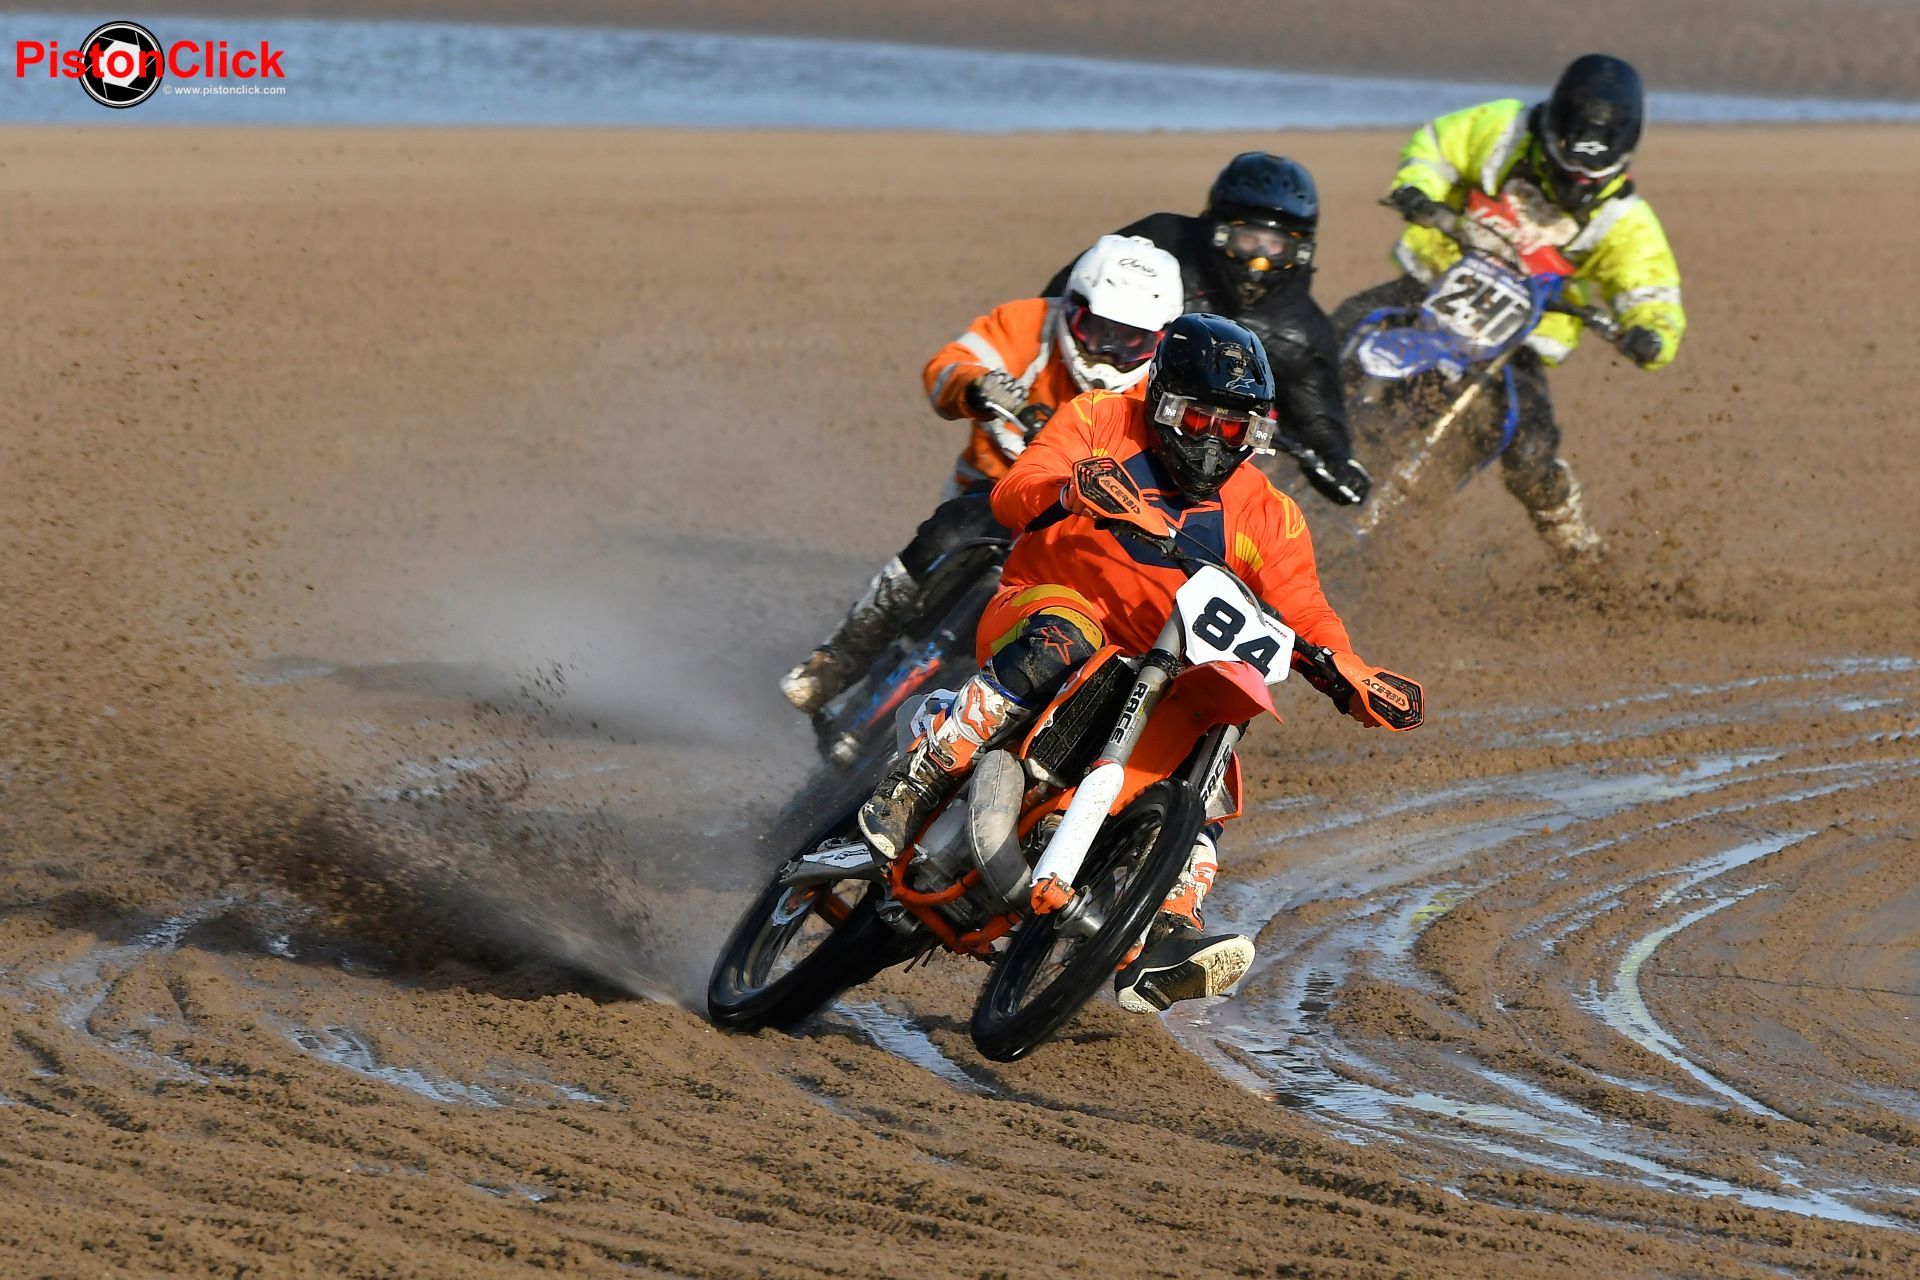 Motocross bikes at Mablethorpe Motorcycle Sand Racing 